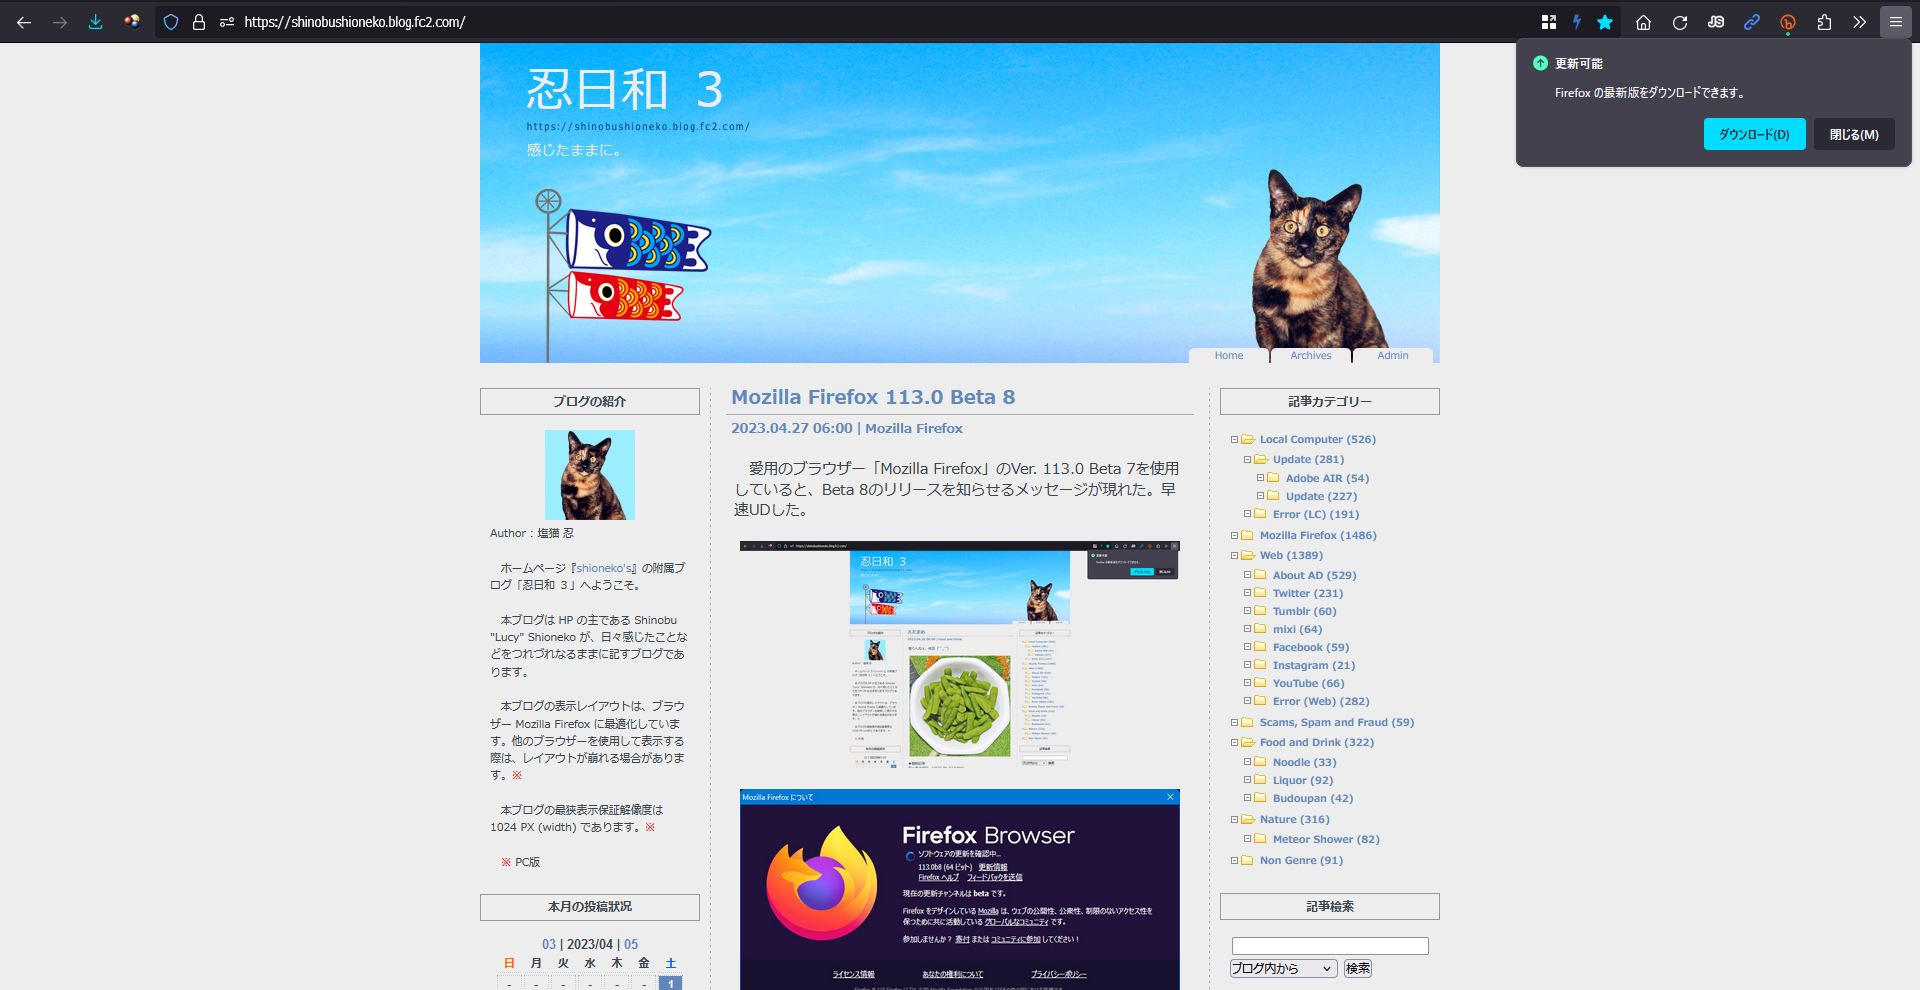 Mozilla Firefox 113.0 Beta 9